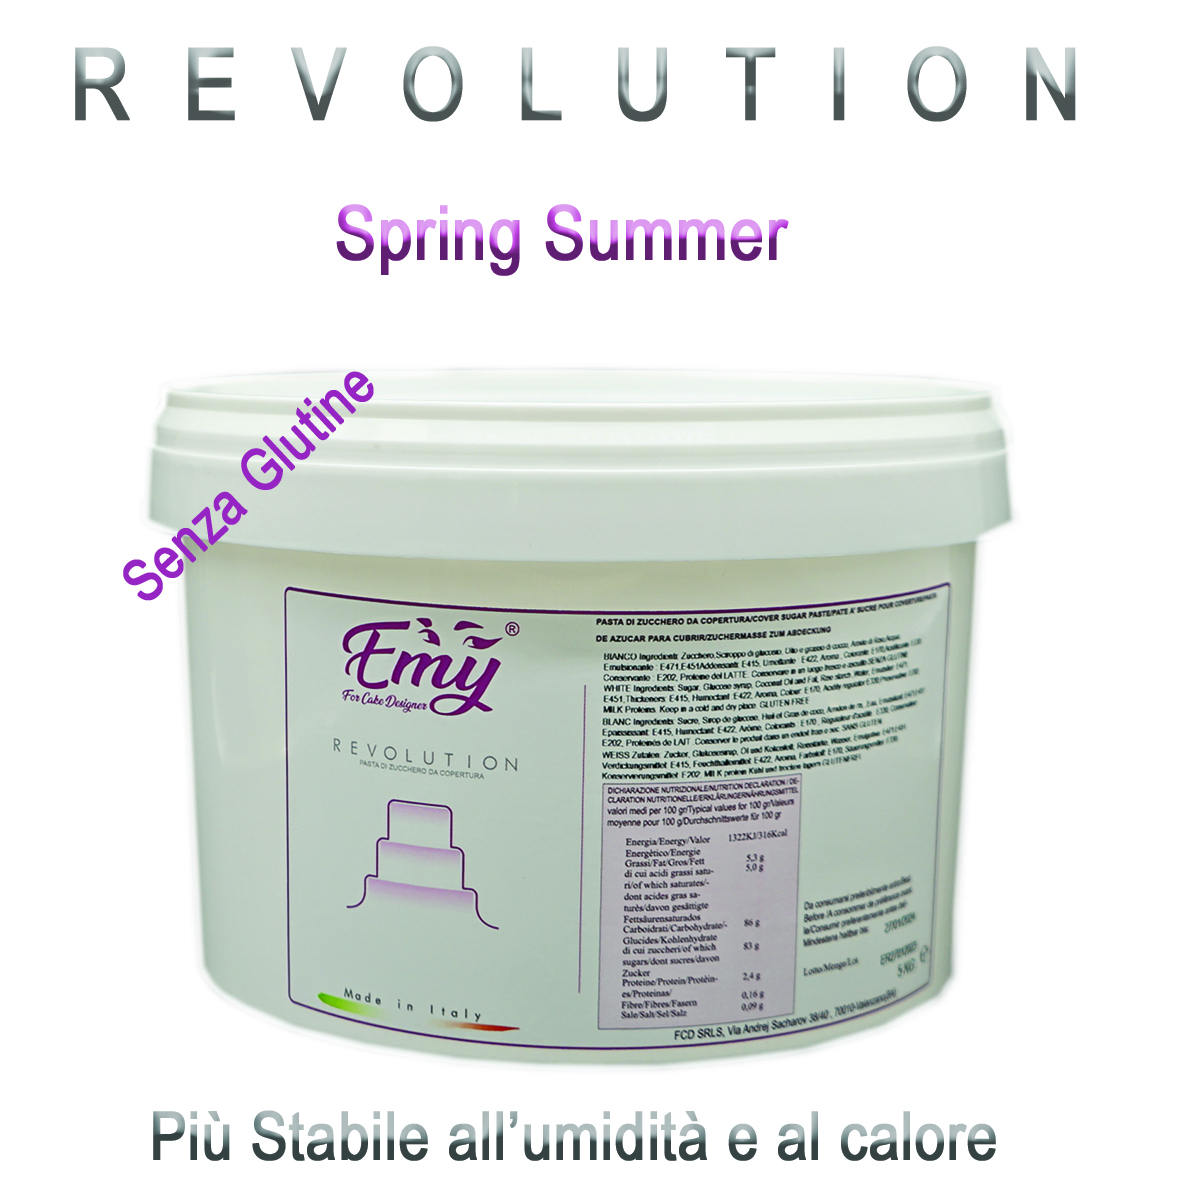  Foto: Pasta di zucchero - Emy Revolution Spring Summer 5 kg Aroma MOU